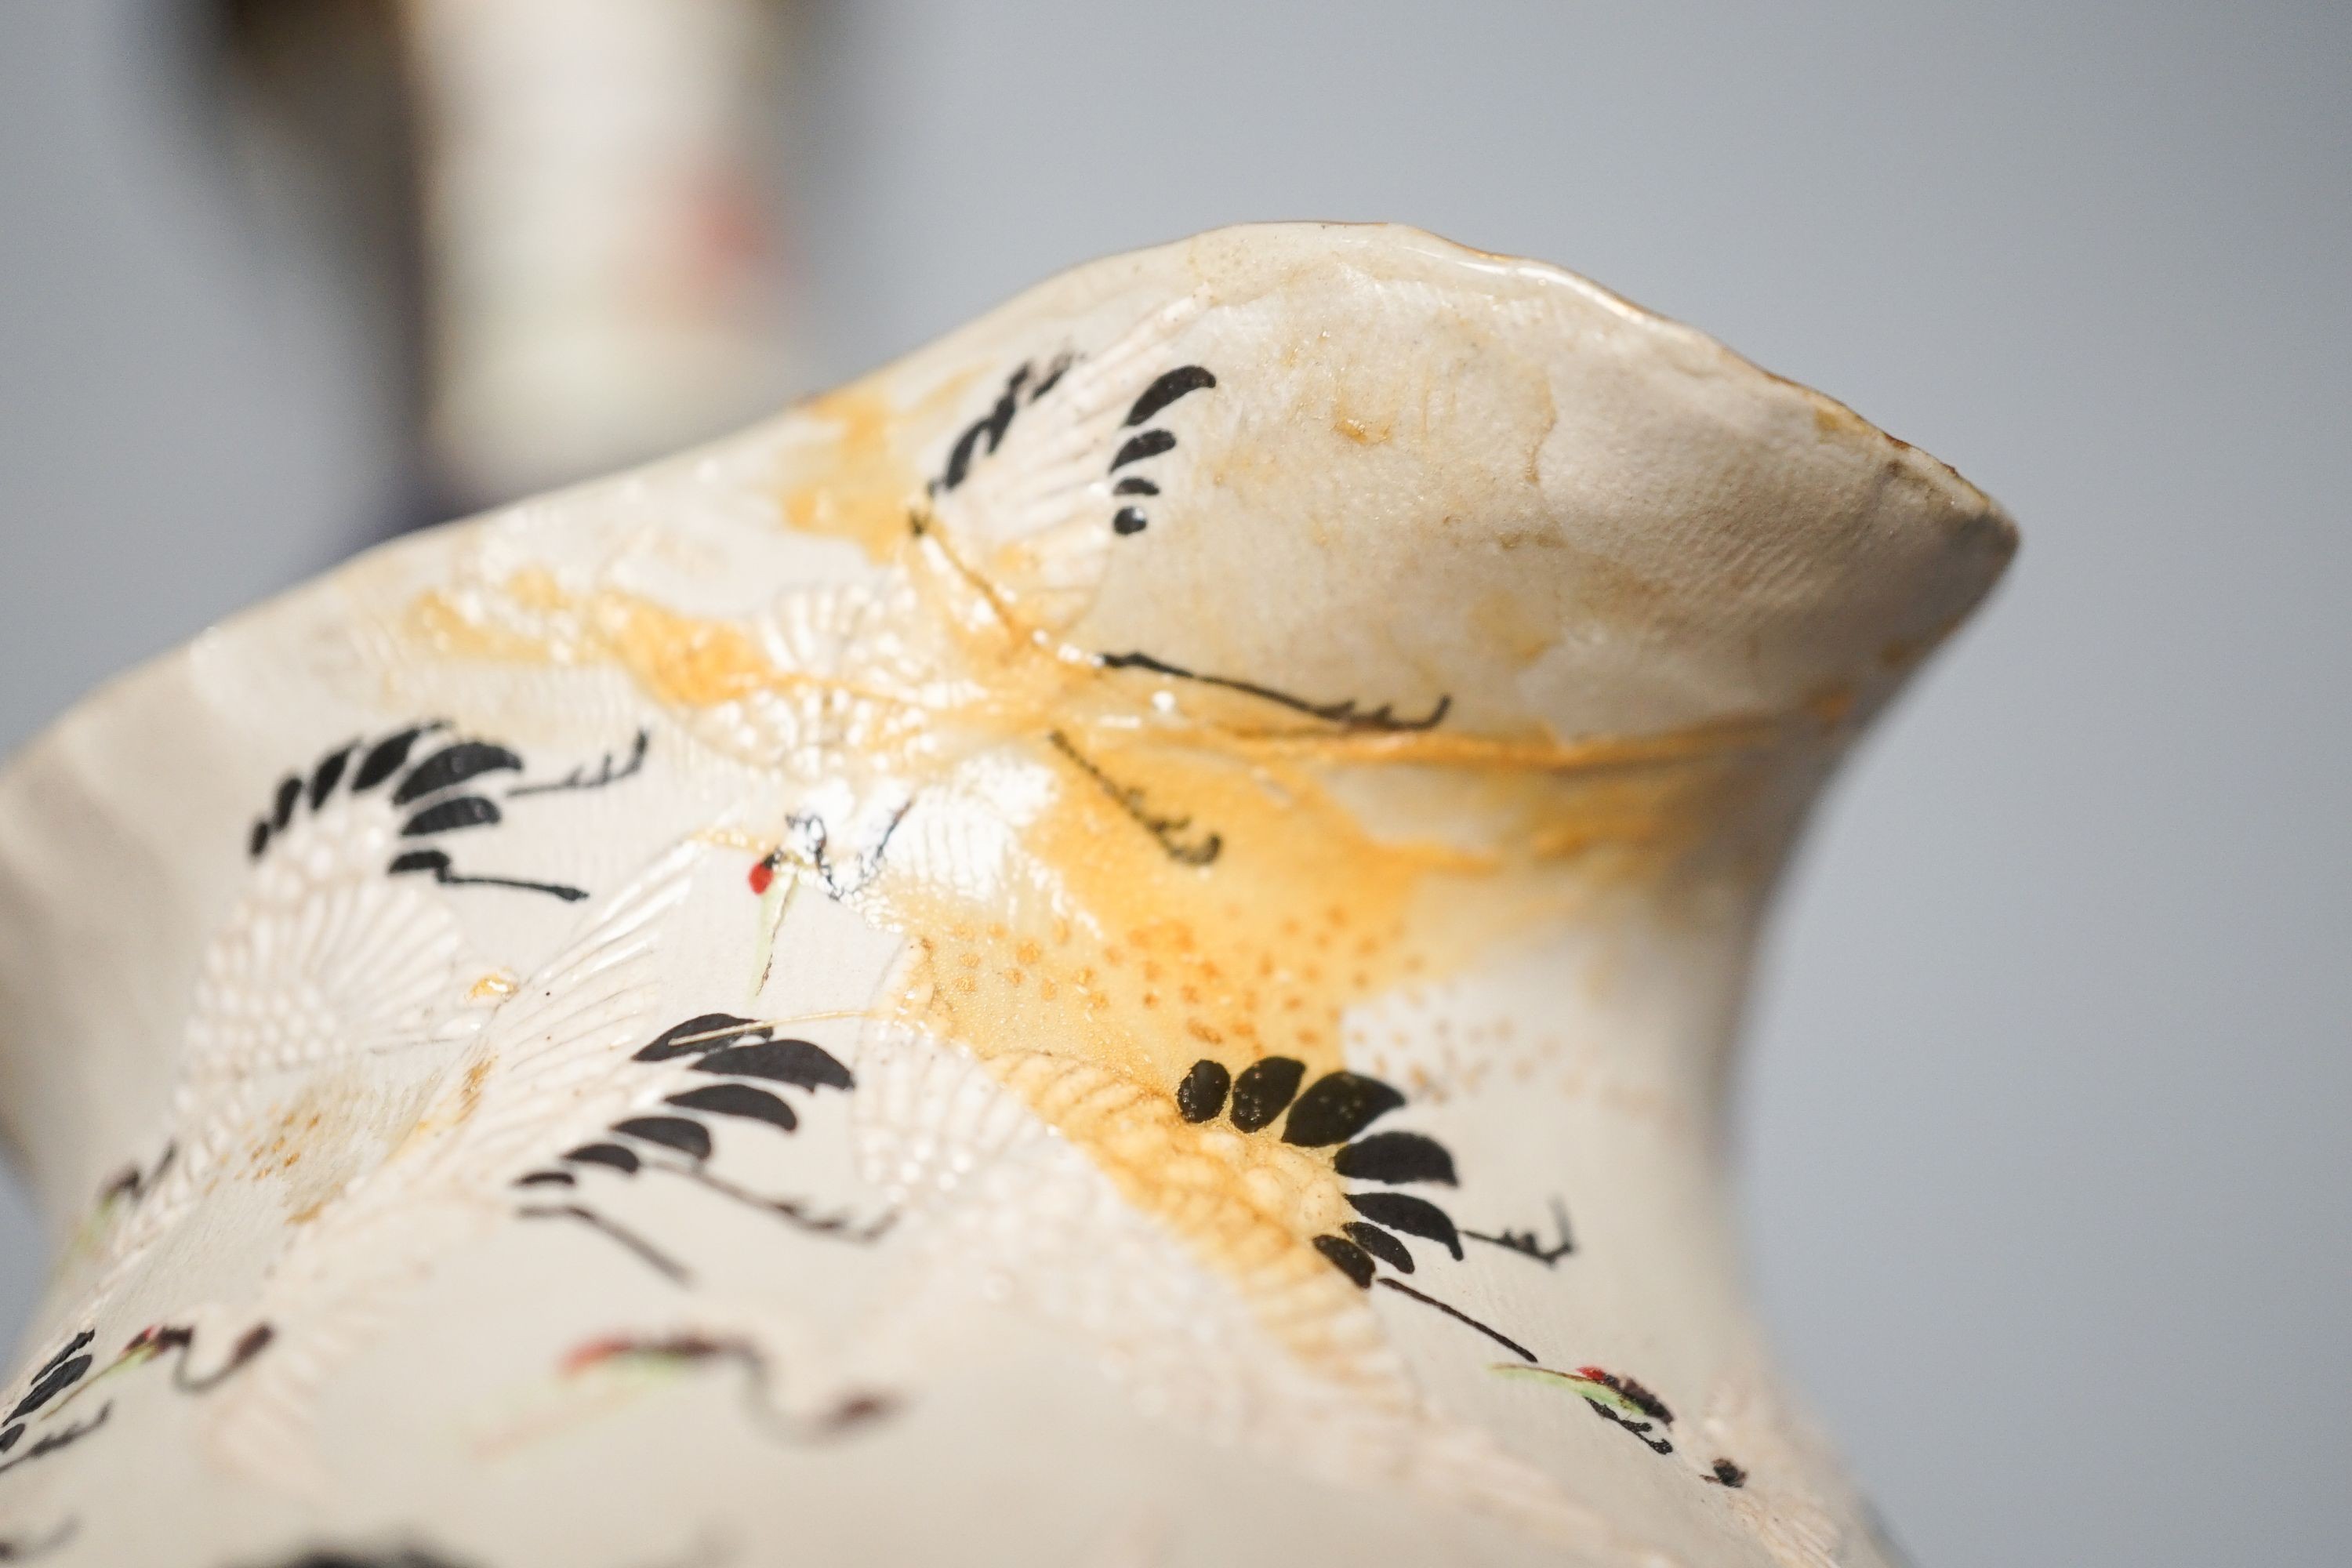 A Japanese black ground ‘cranes’ cloisonné enamel vase, 18.3cm, a Satsuma pottery vase and a crane decorated jug (3)